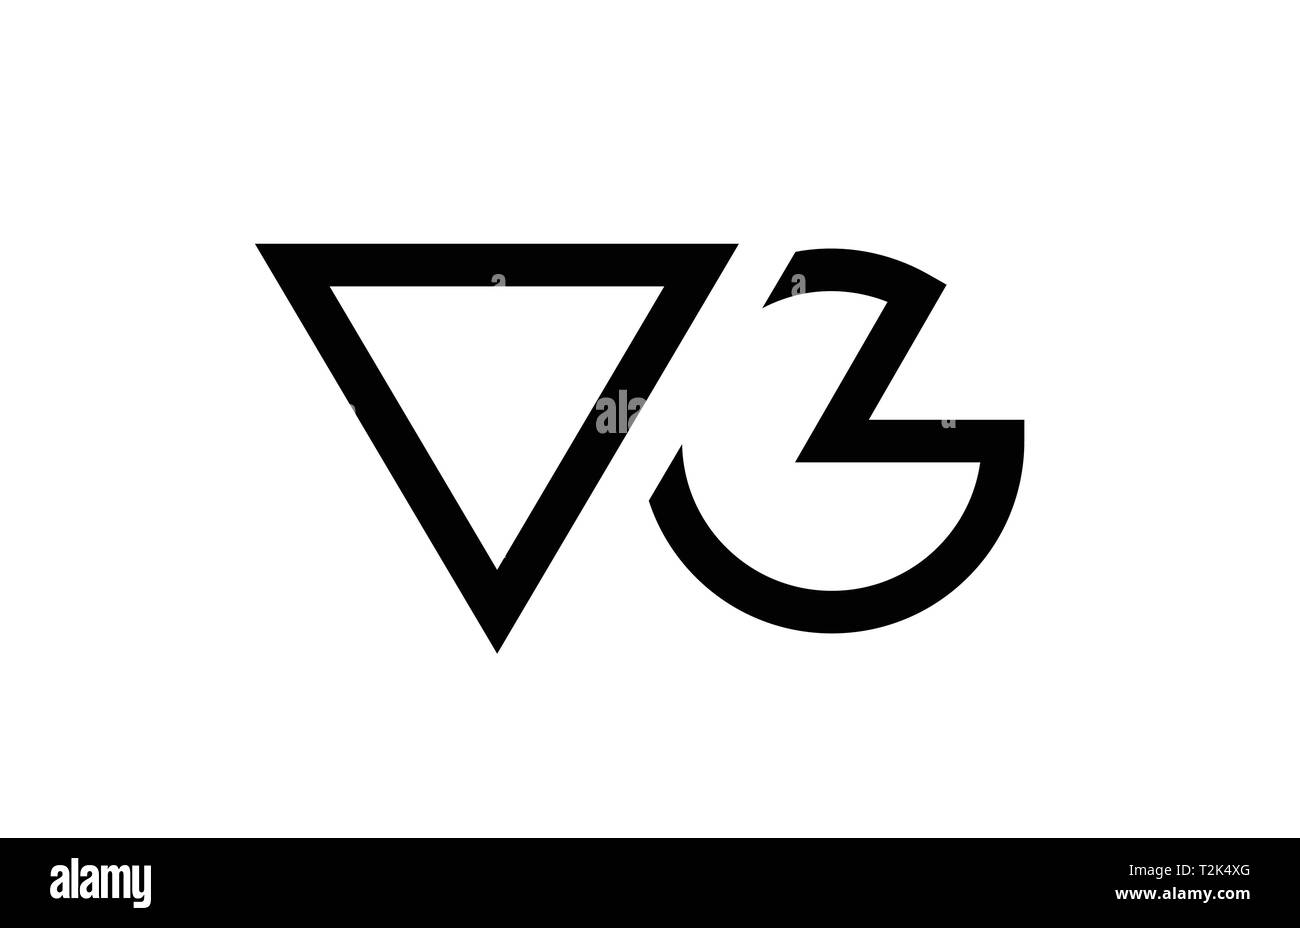 Bv vg. Гамма логотип вектор. Буквы ВГ картинки. V VG.